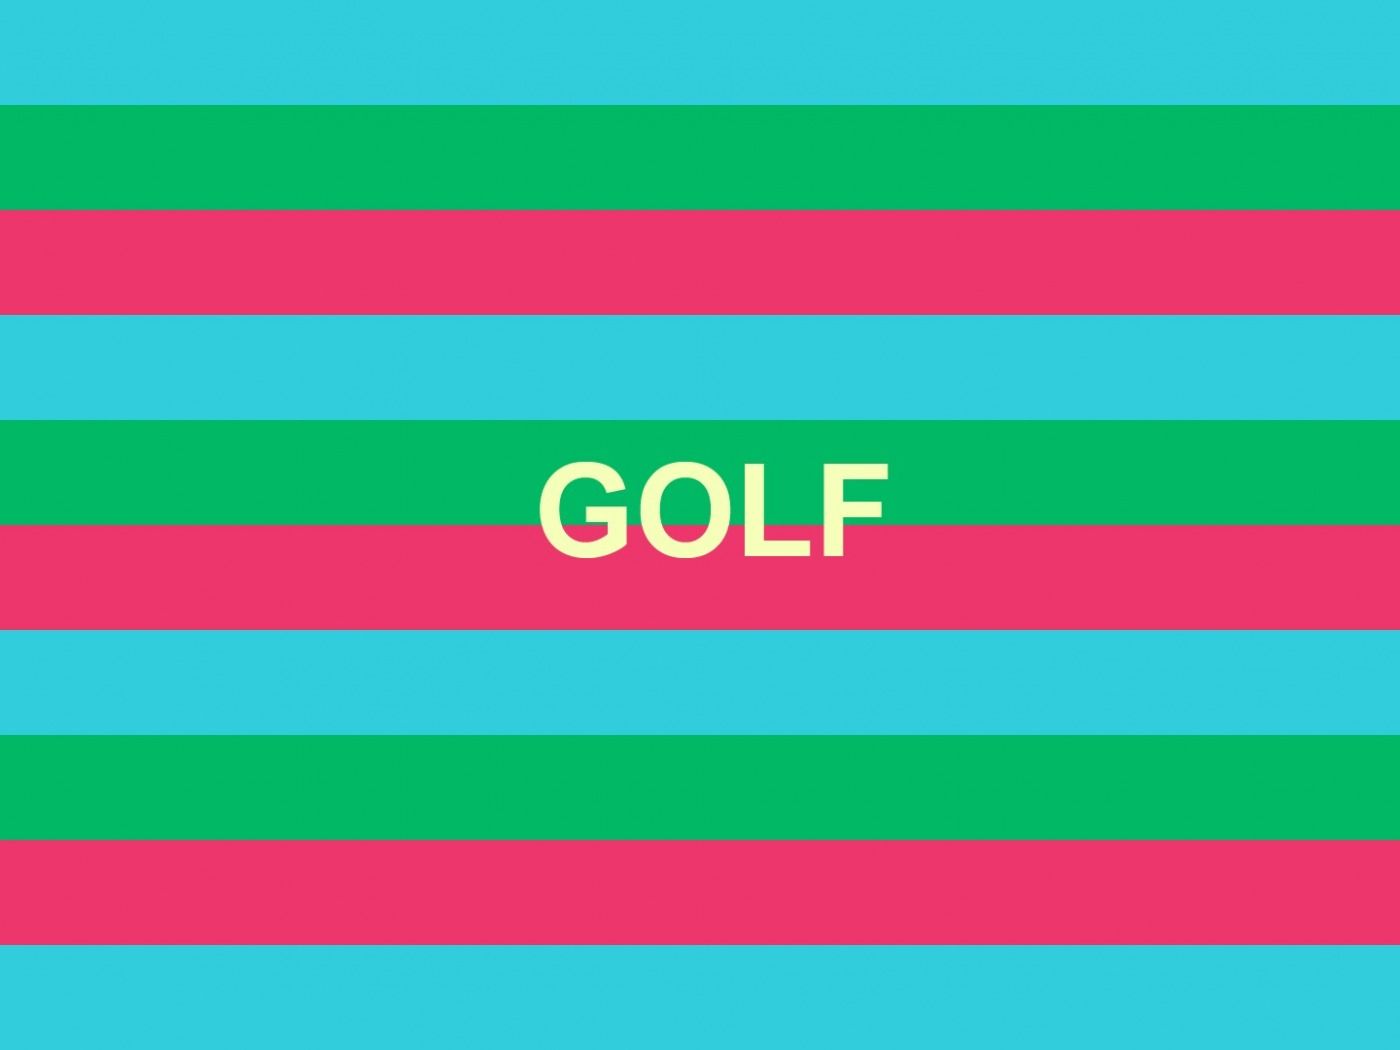 Golf Wang Wallpaper Free Golf Wang Background